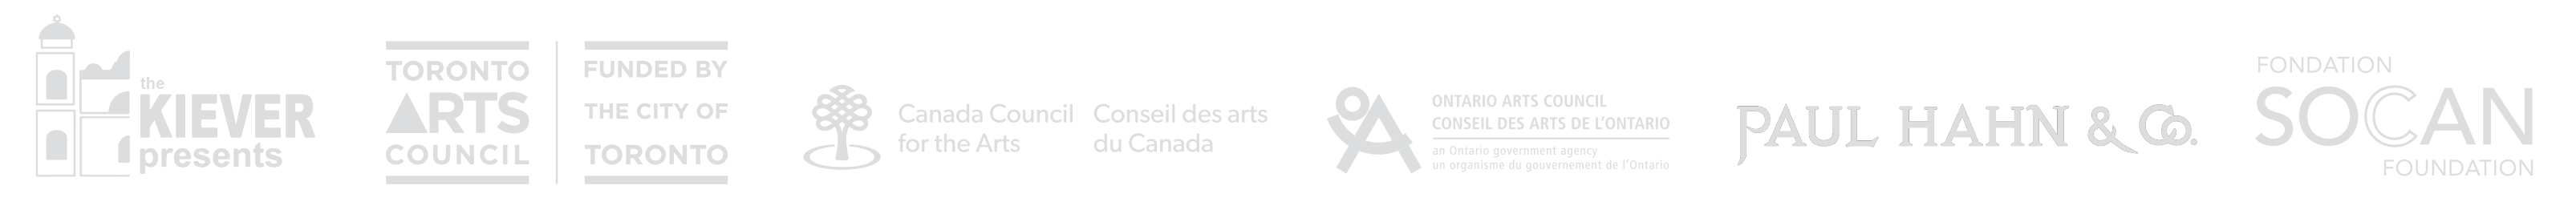 the Kiever presents. Toronto Arts Council. Canada Council for the Arts, Conseil des arts du Canada. Ontario Arts Council, Conseil des arts du l'Ontario. Paul Hahn & Co. SoCan